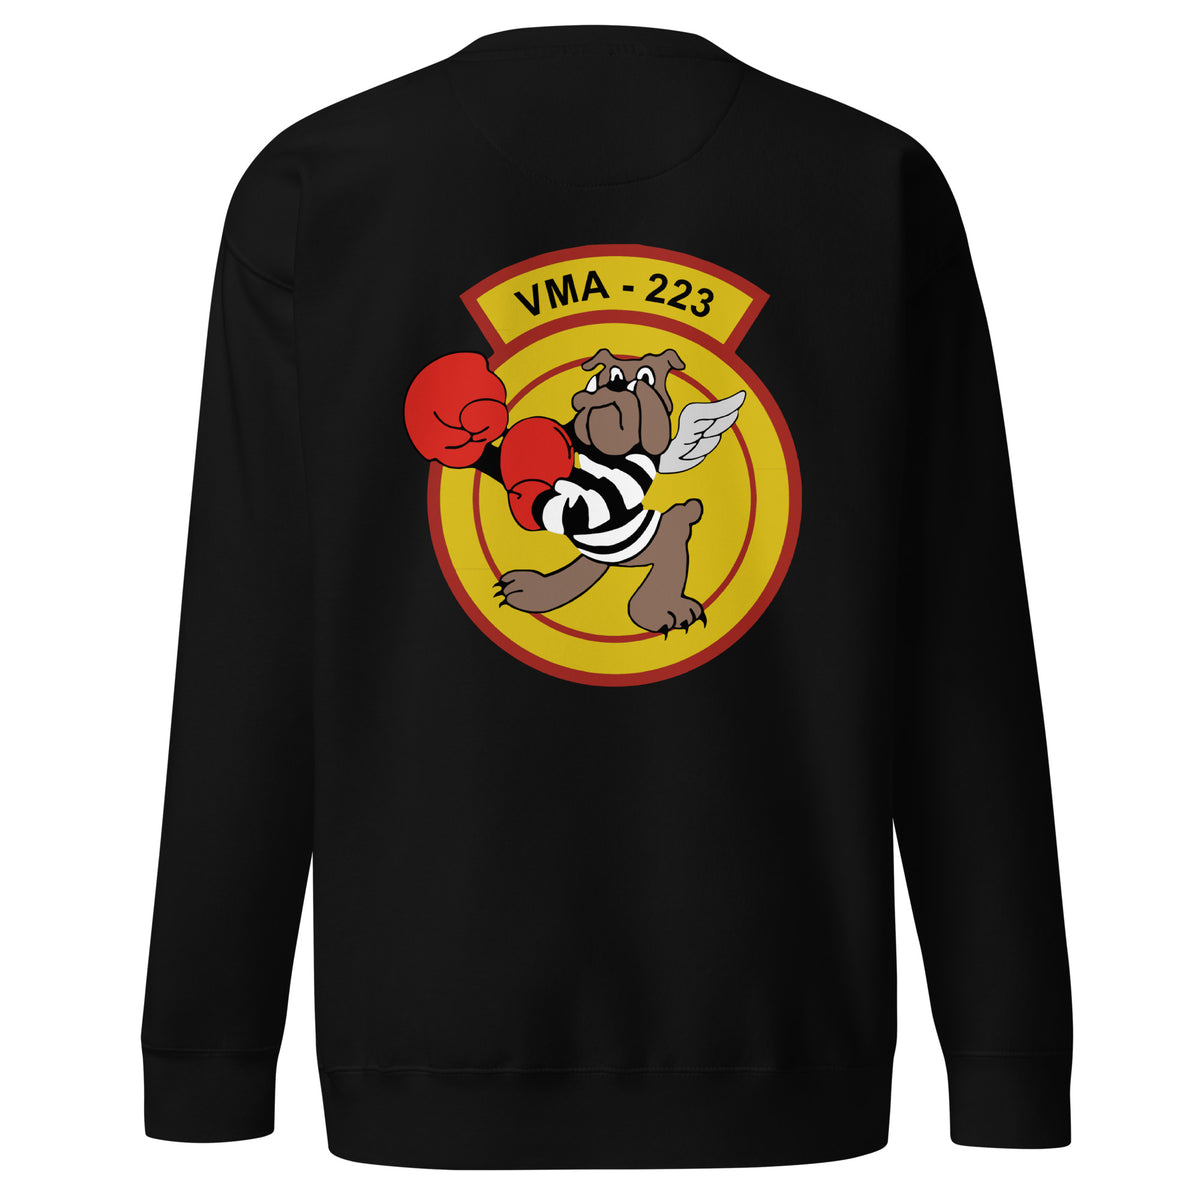 VMA -223 Bulldogs Sweatshirt